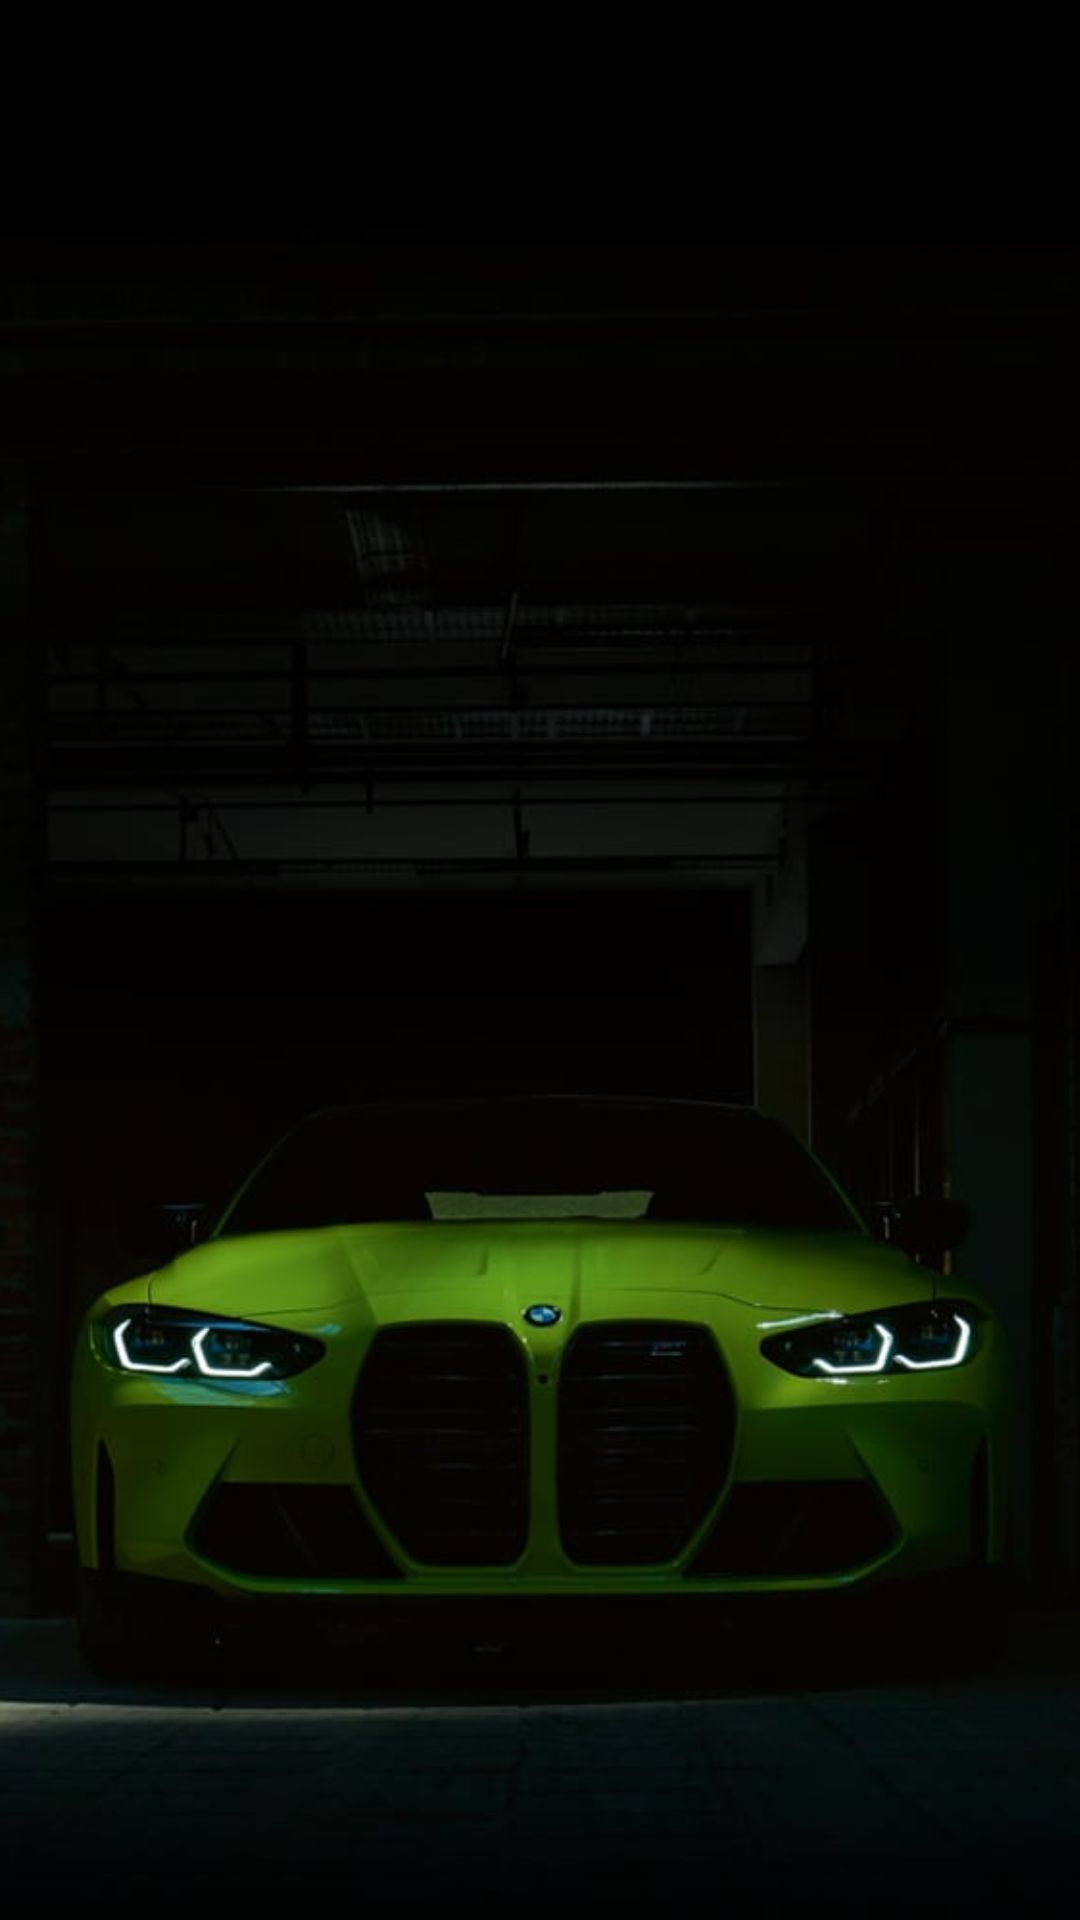 IPhone wallpaper of a green BMW sports car in a dark garage - BMW